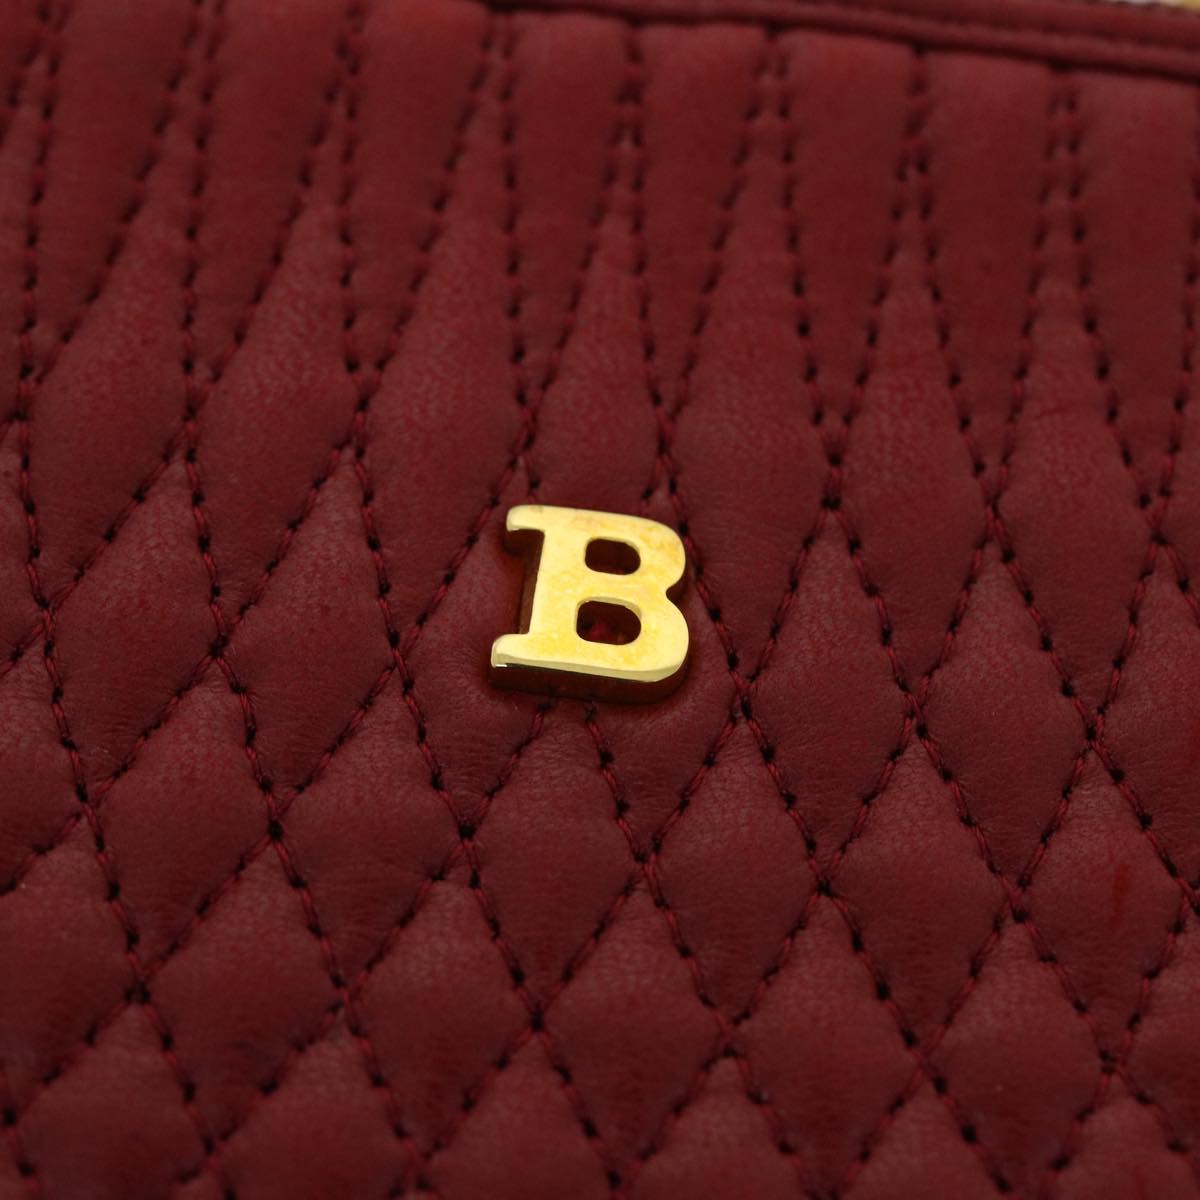 BALLY Matelasse Chain Shoulder Bag Leather Red Auth ki3328